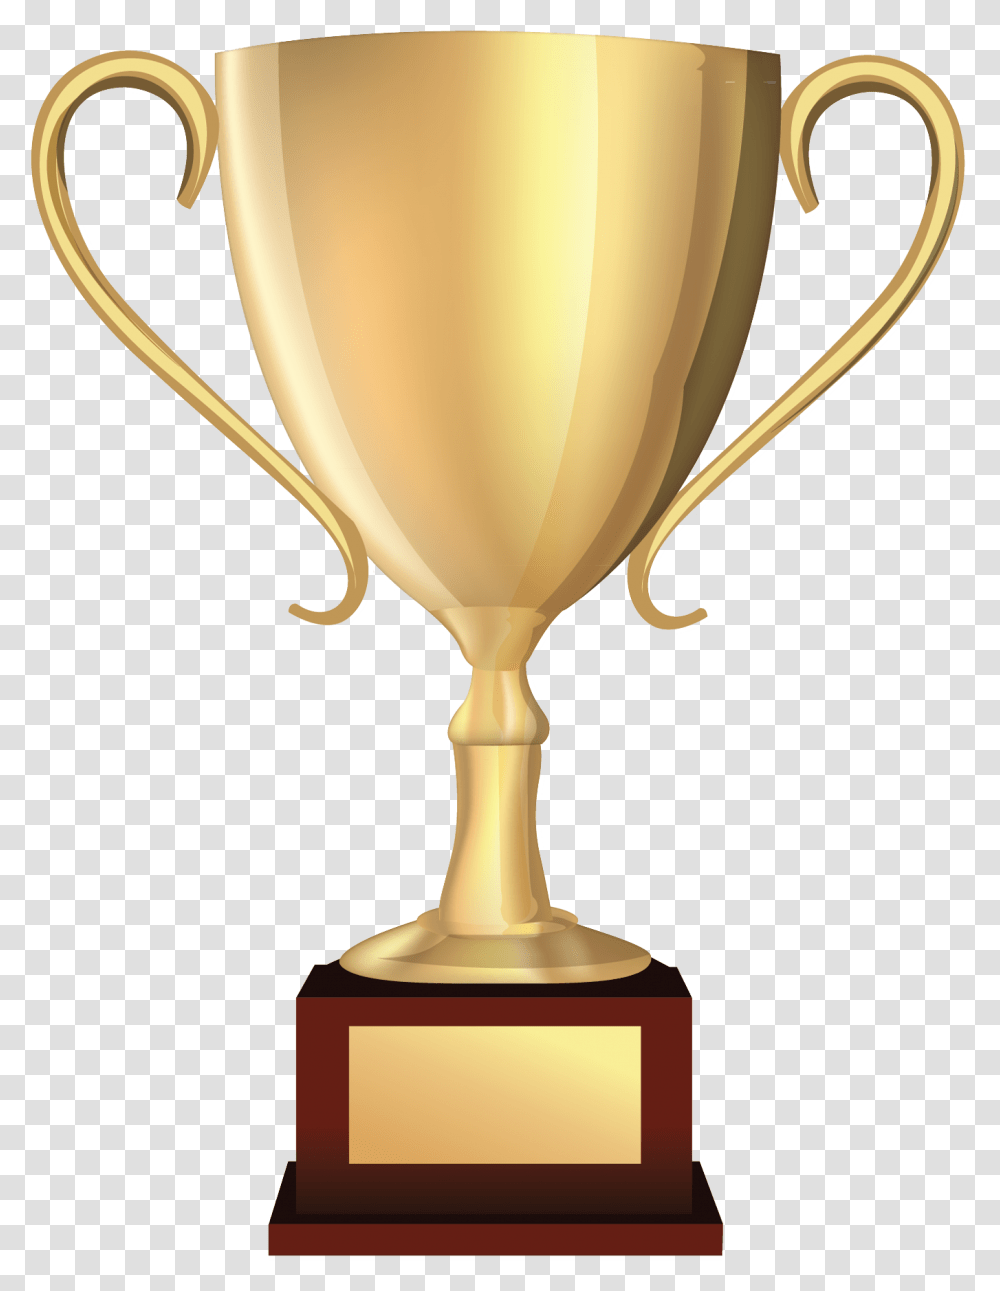 Golden Cup Image Trophy Meme, Lamp Transparent Png